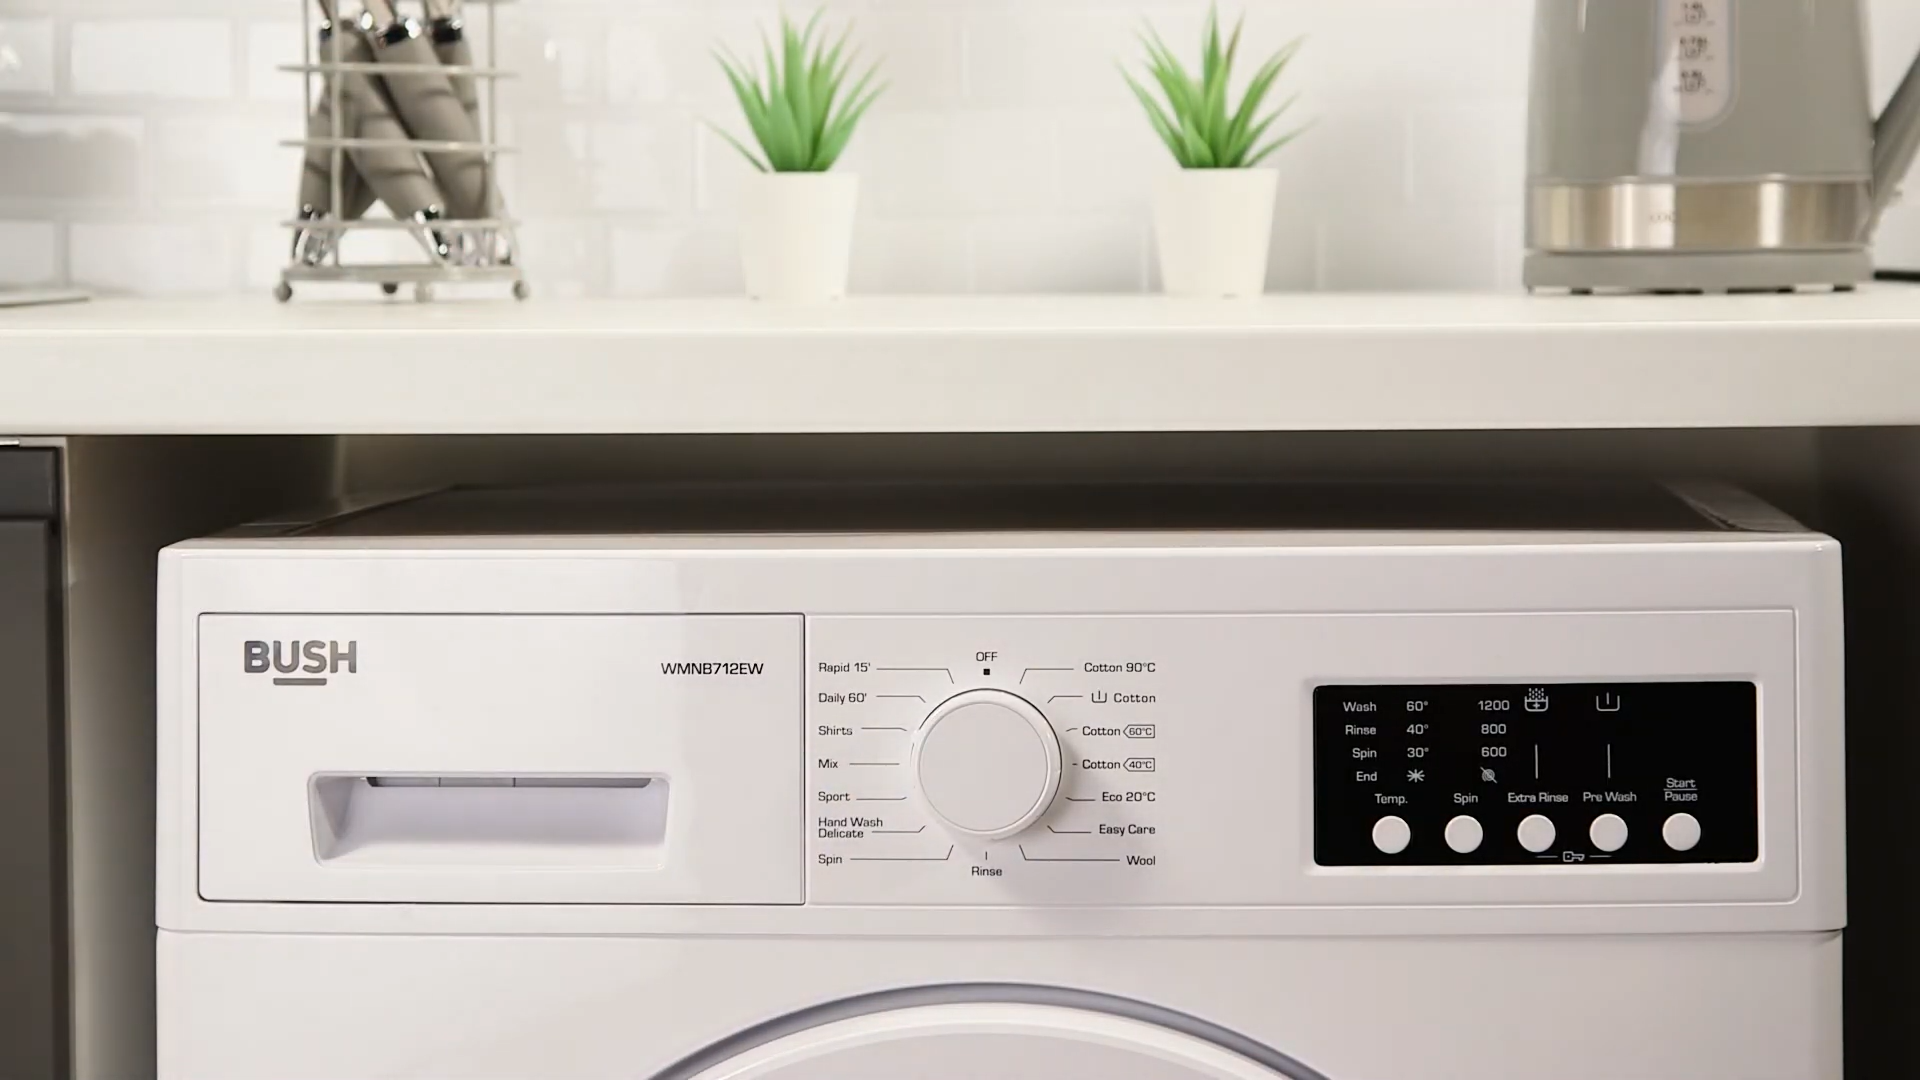 Washing Machines: Detergent Drawer Troubleshooting